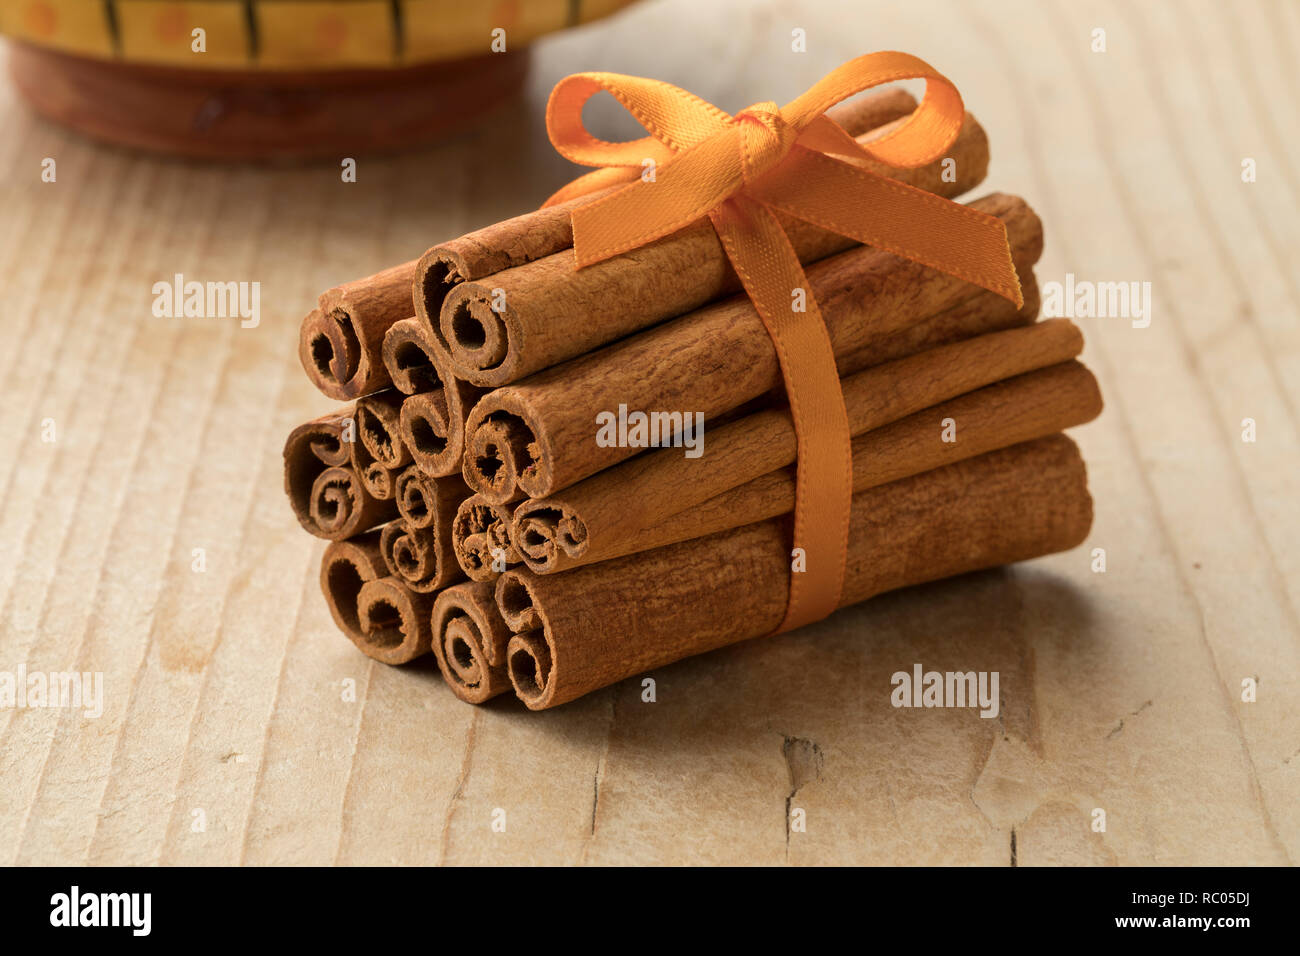 Bunch of cassia cinnamon sticks with an orange ribbon Stock Photo